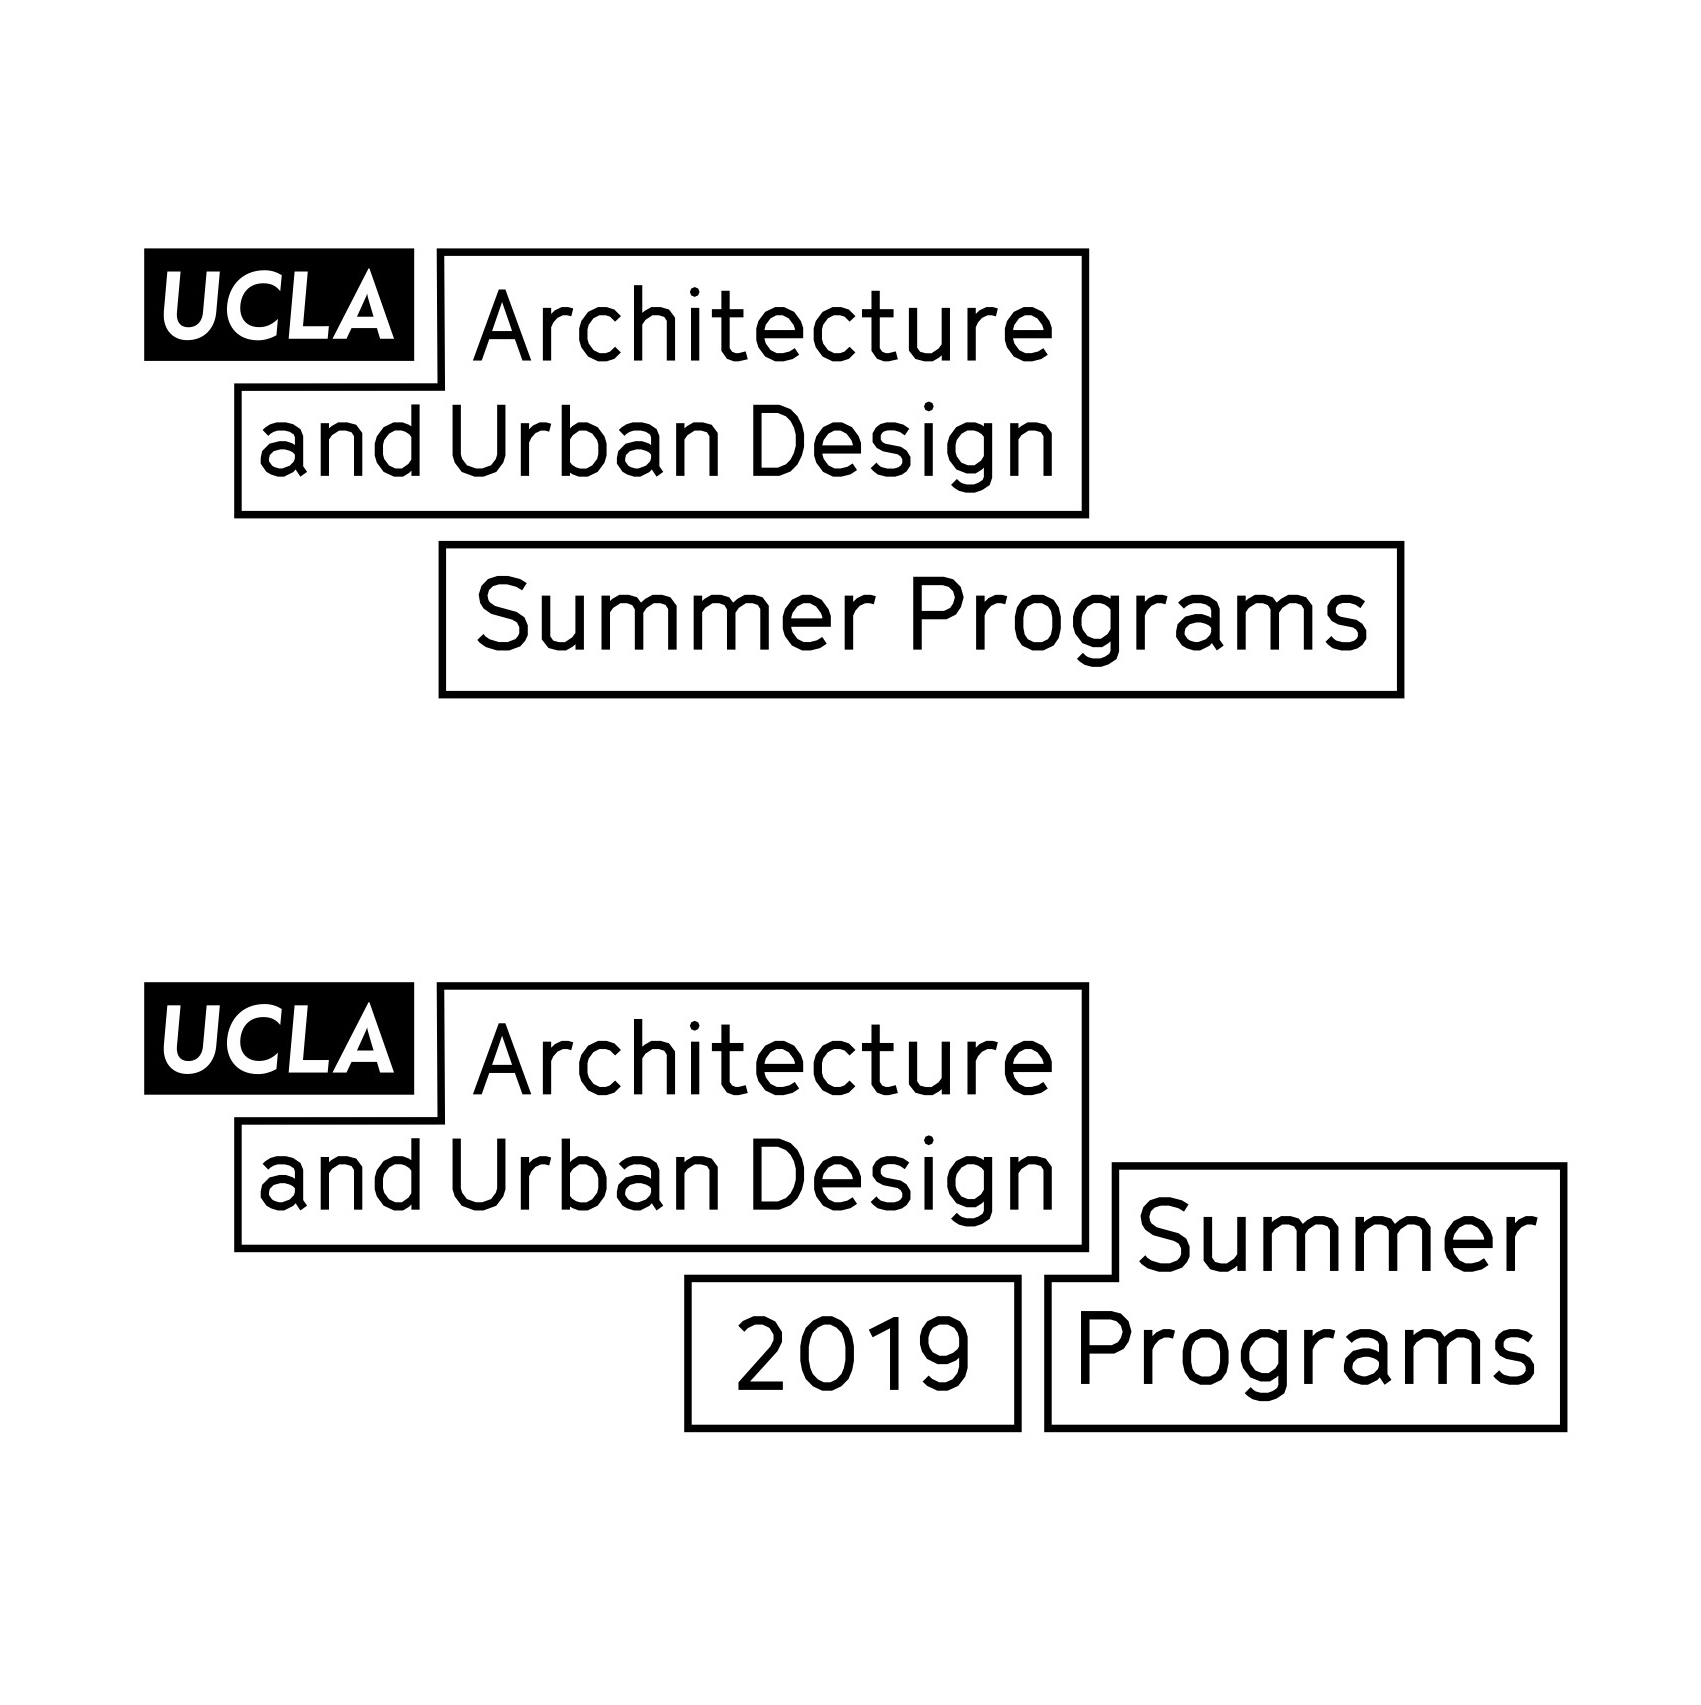 UCLA Architecture and Urban Design